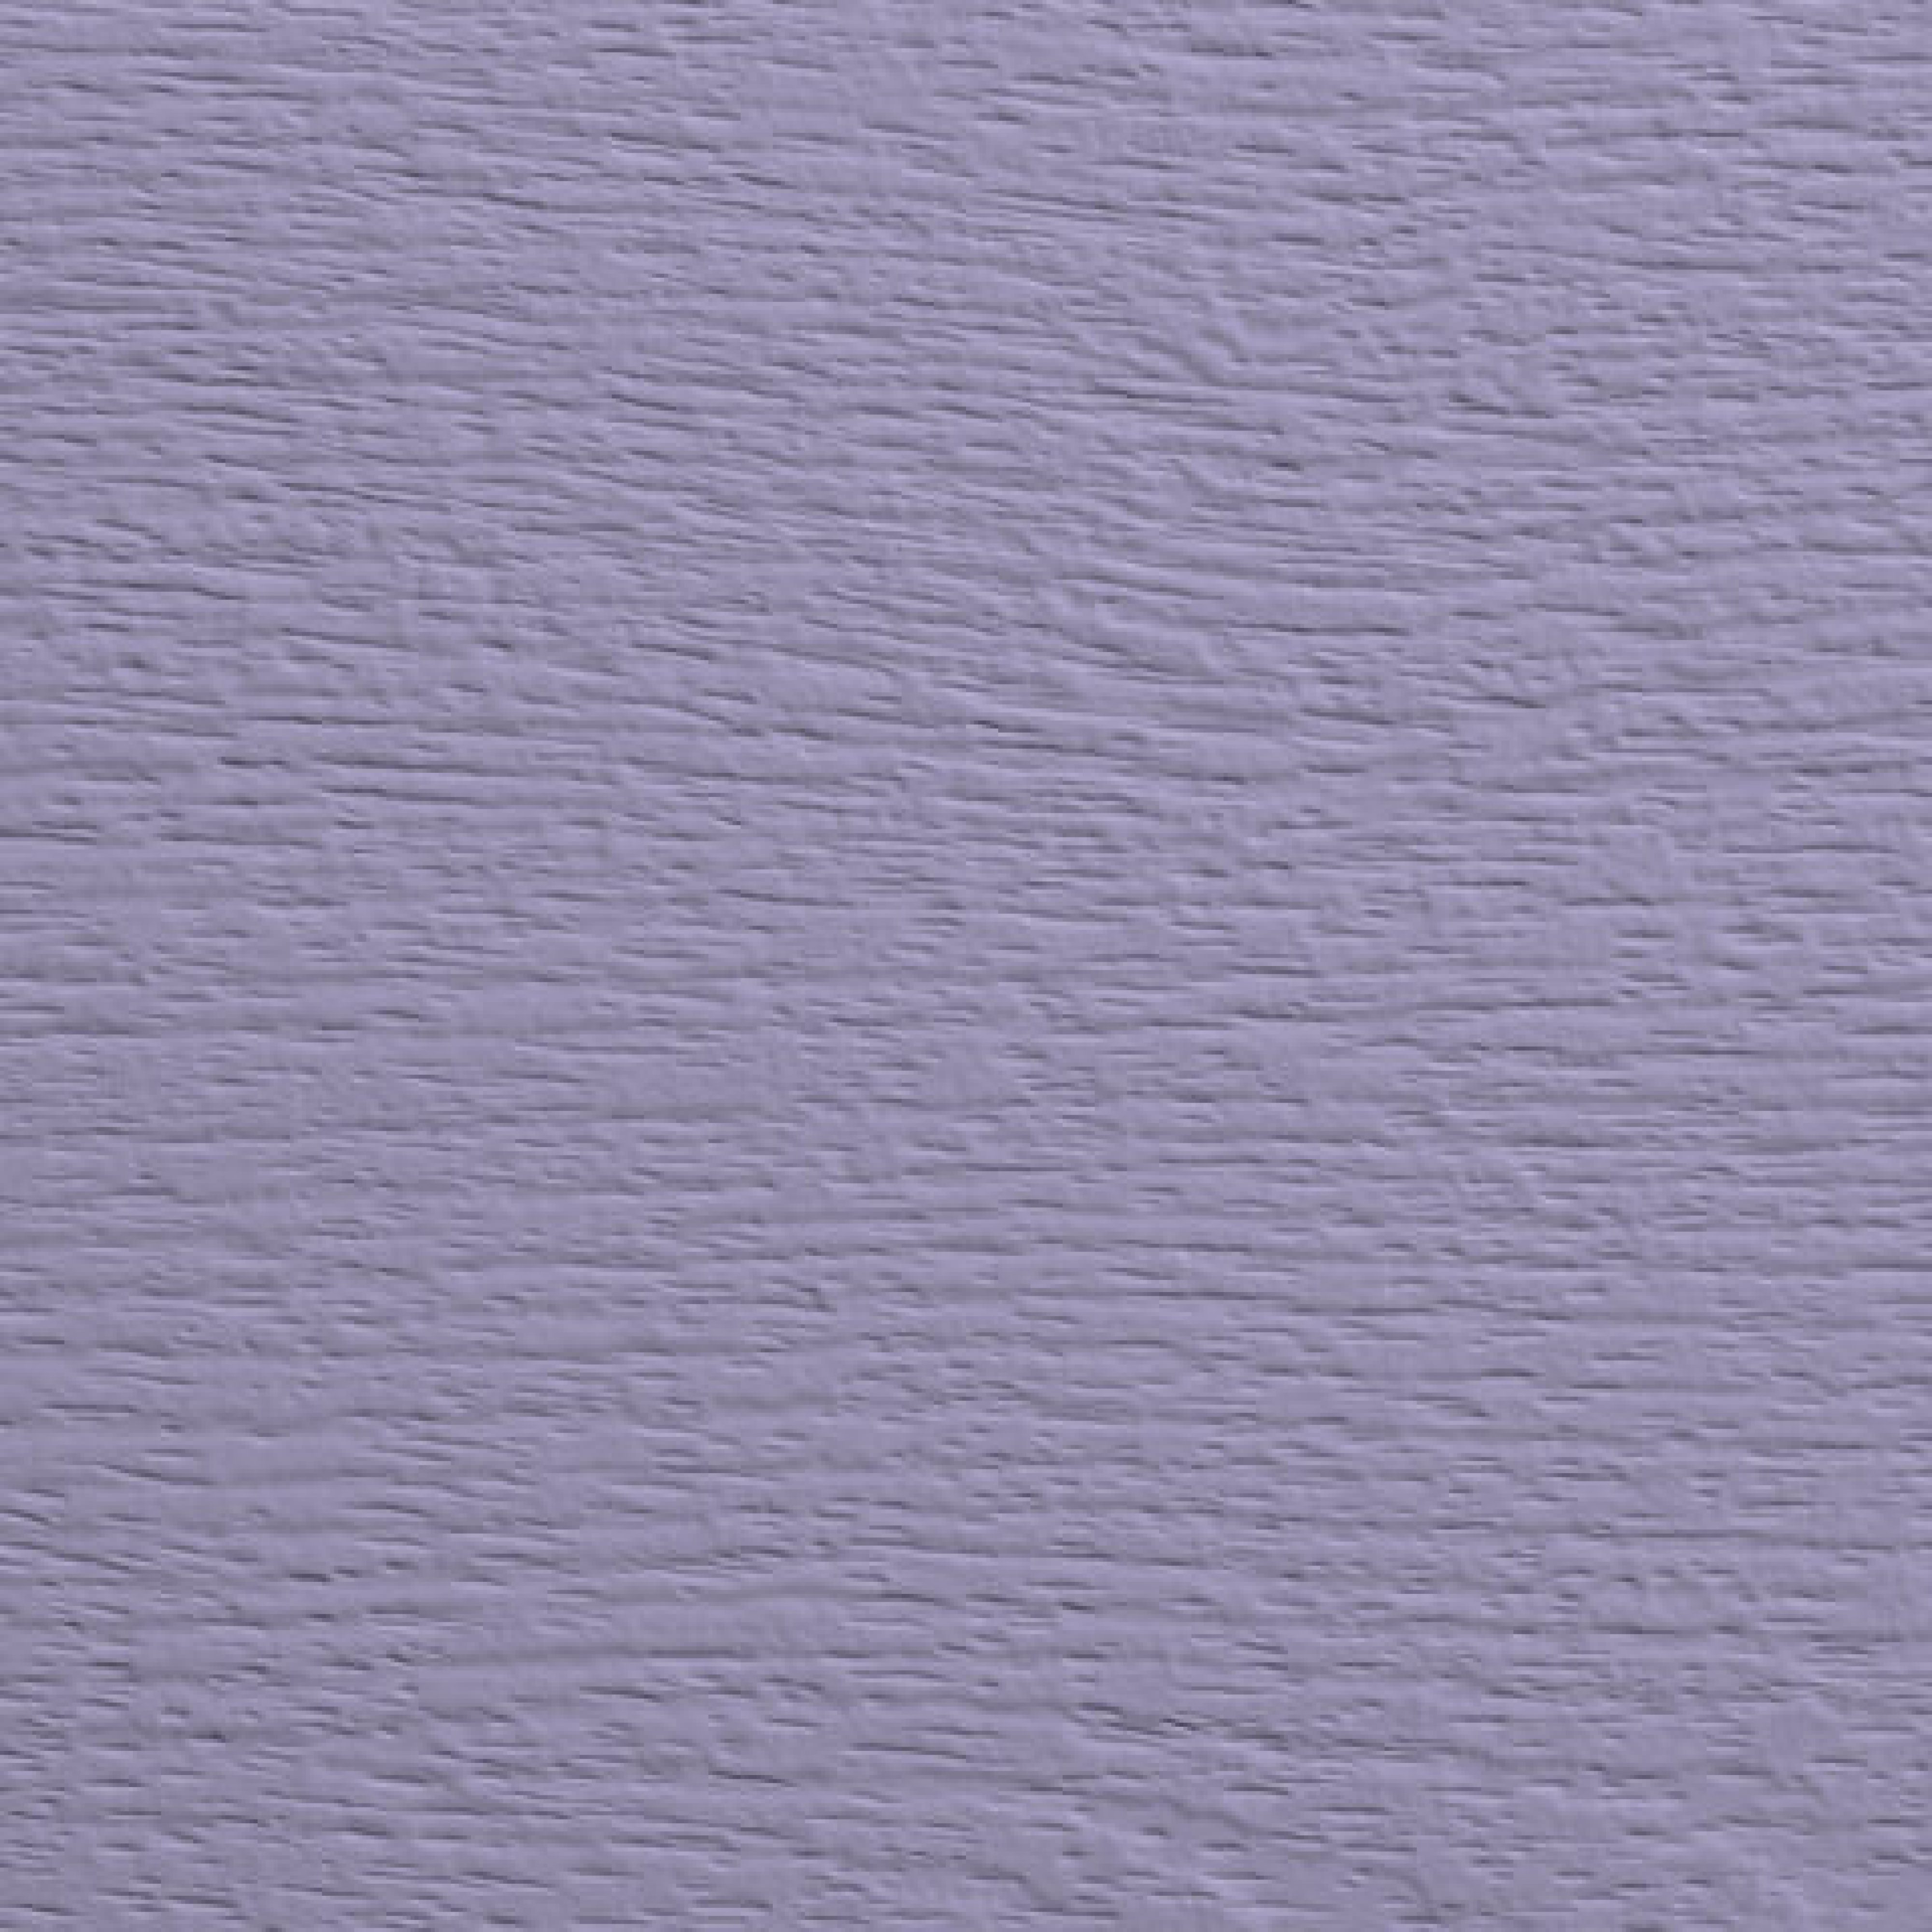 Lavender-Swatch-800x480